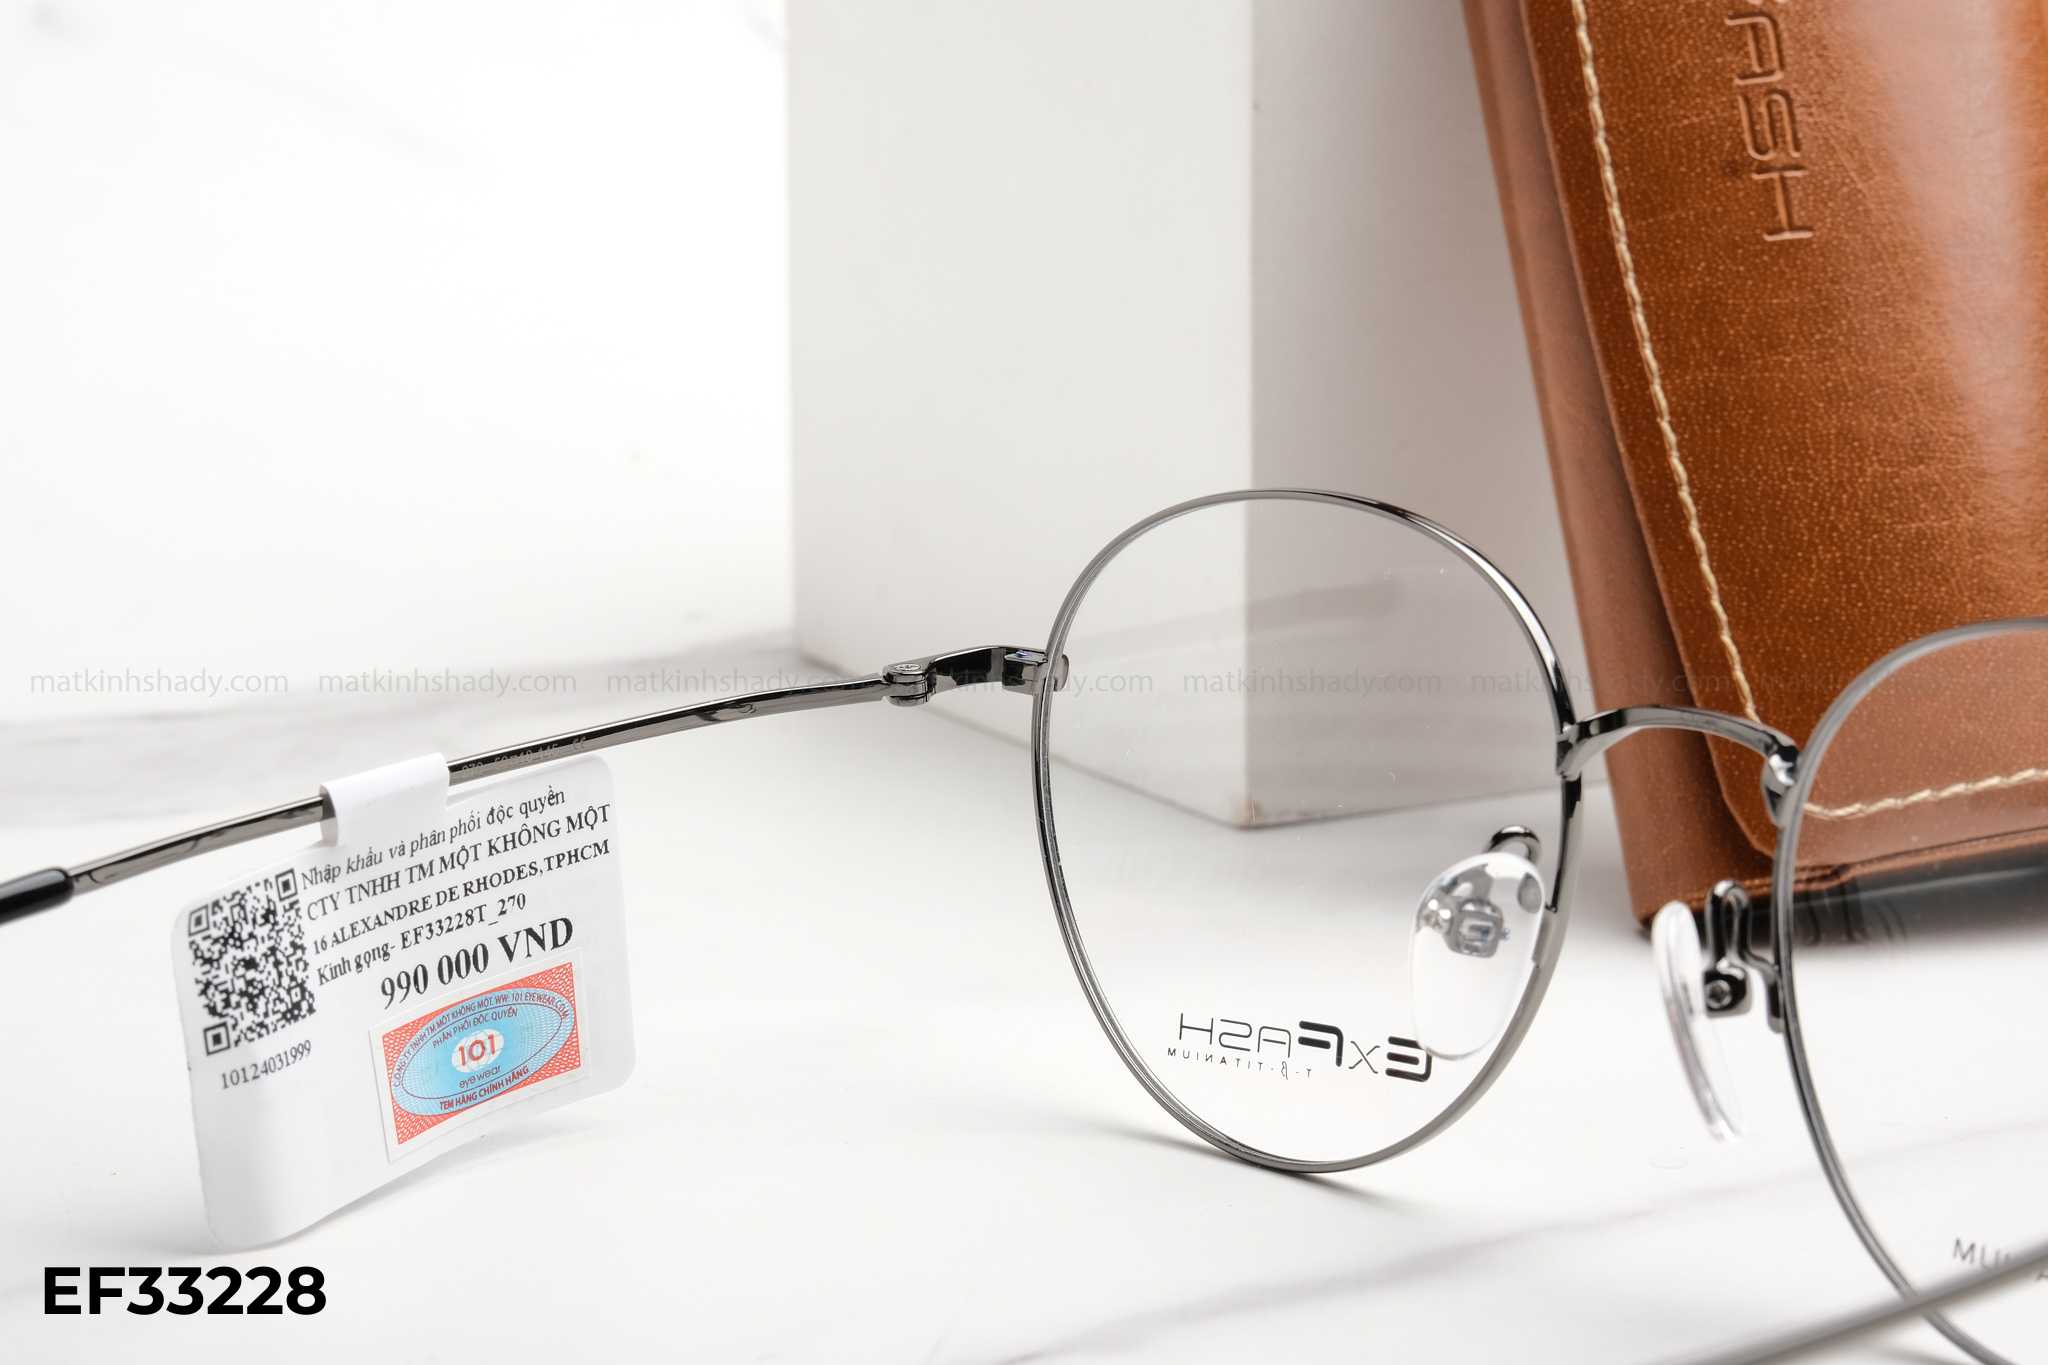  Exfash Eyewear - Glasses - EF33228 